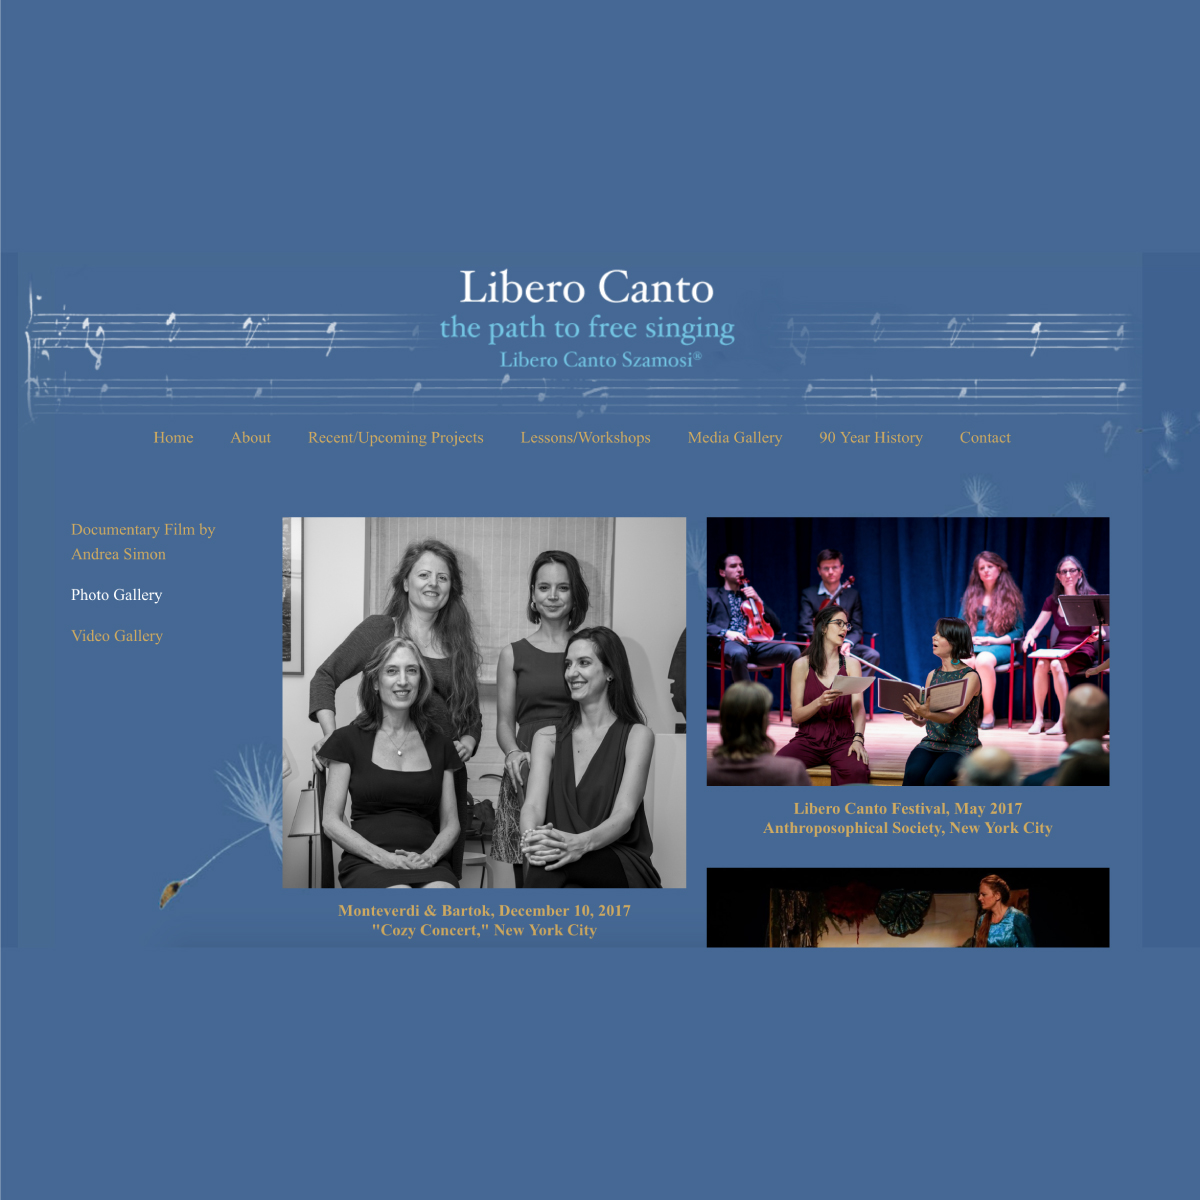 A pianist's website